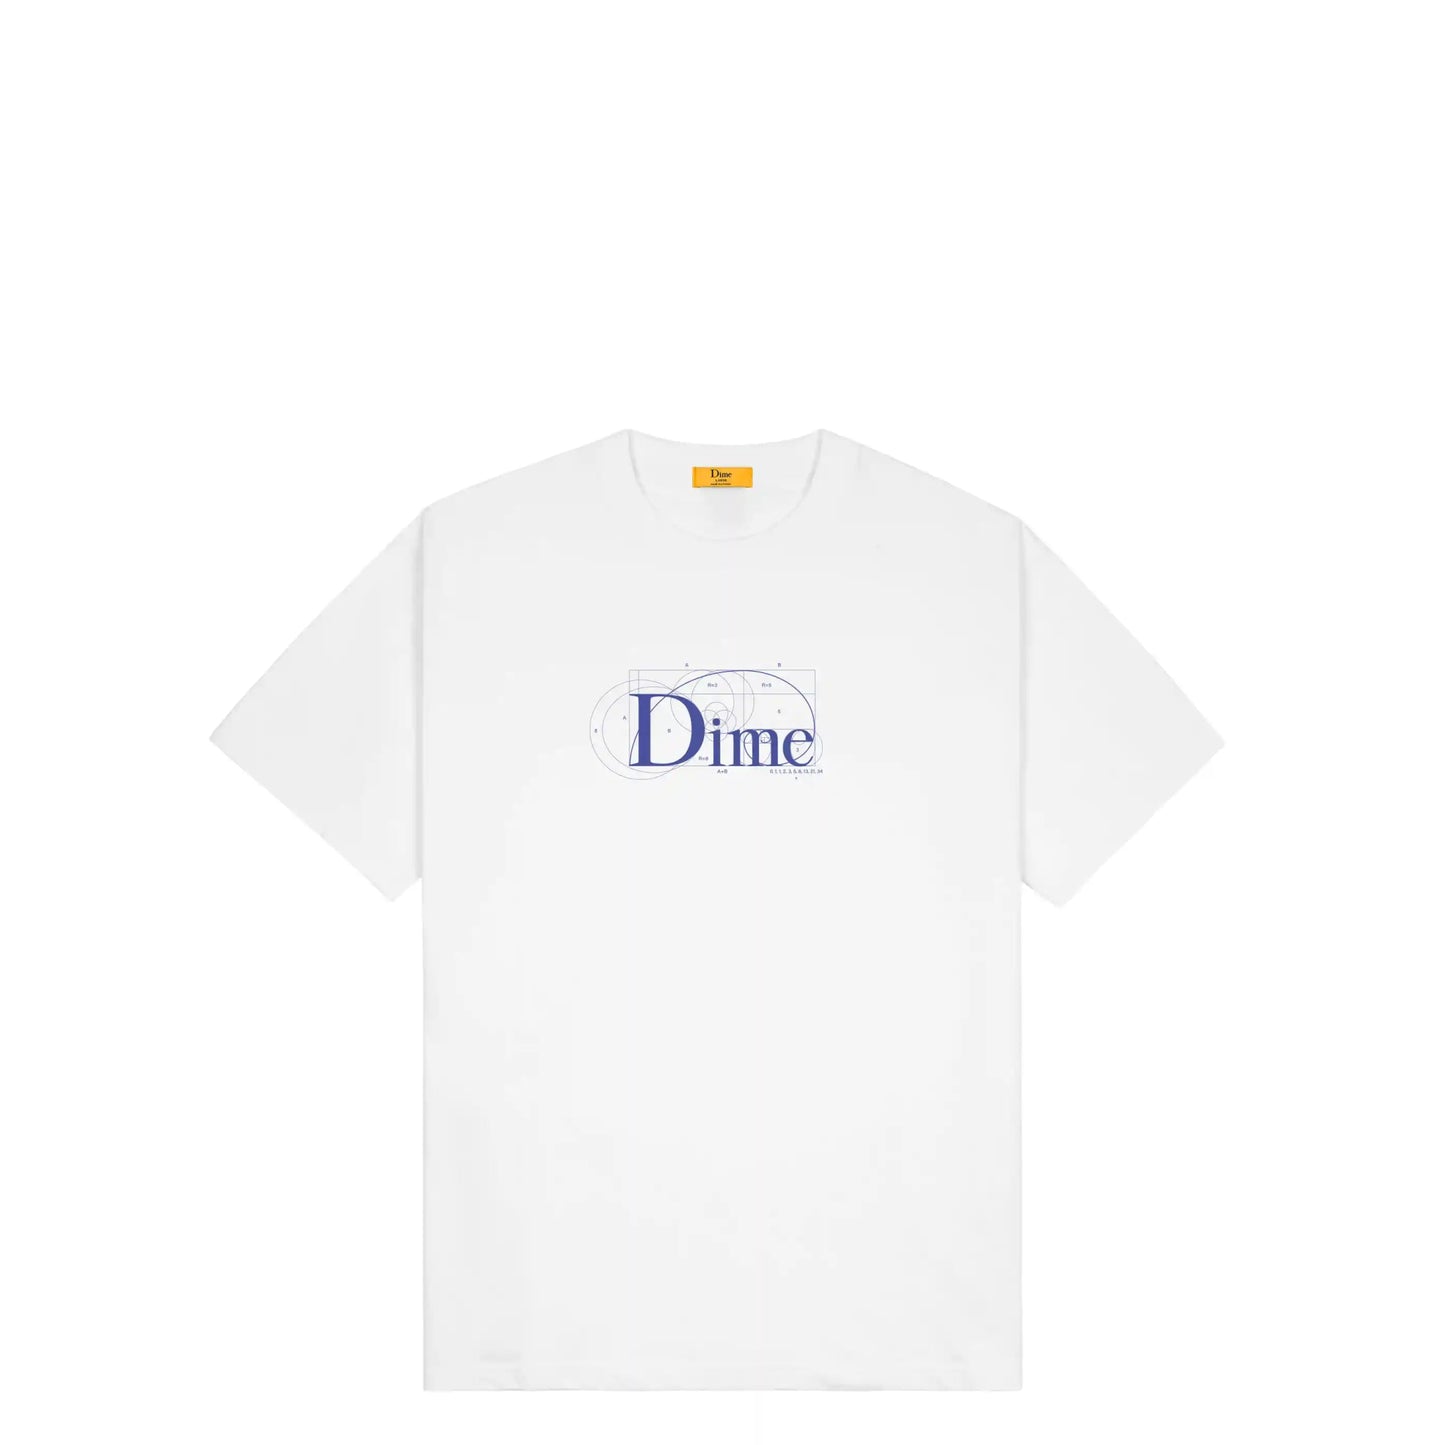 Dime Classic Ratio T-Shirt, white - Tiki Room Skateboards - 1